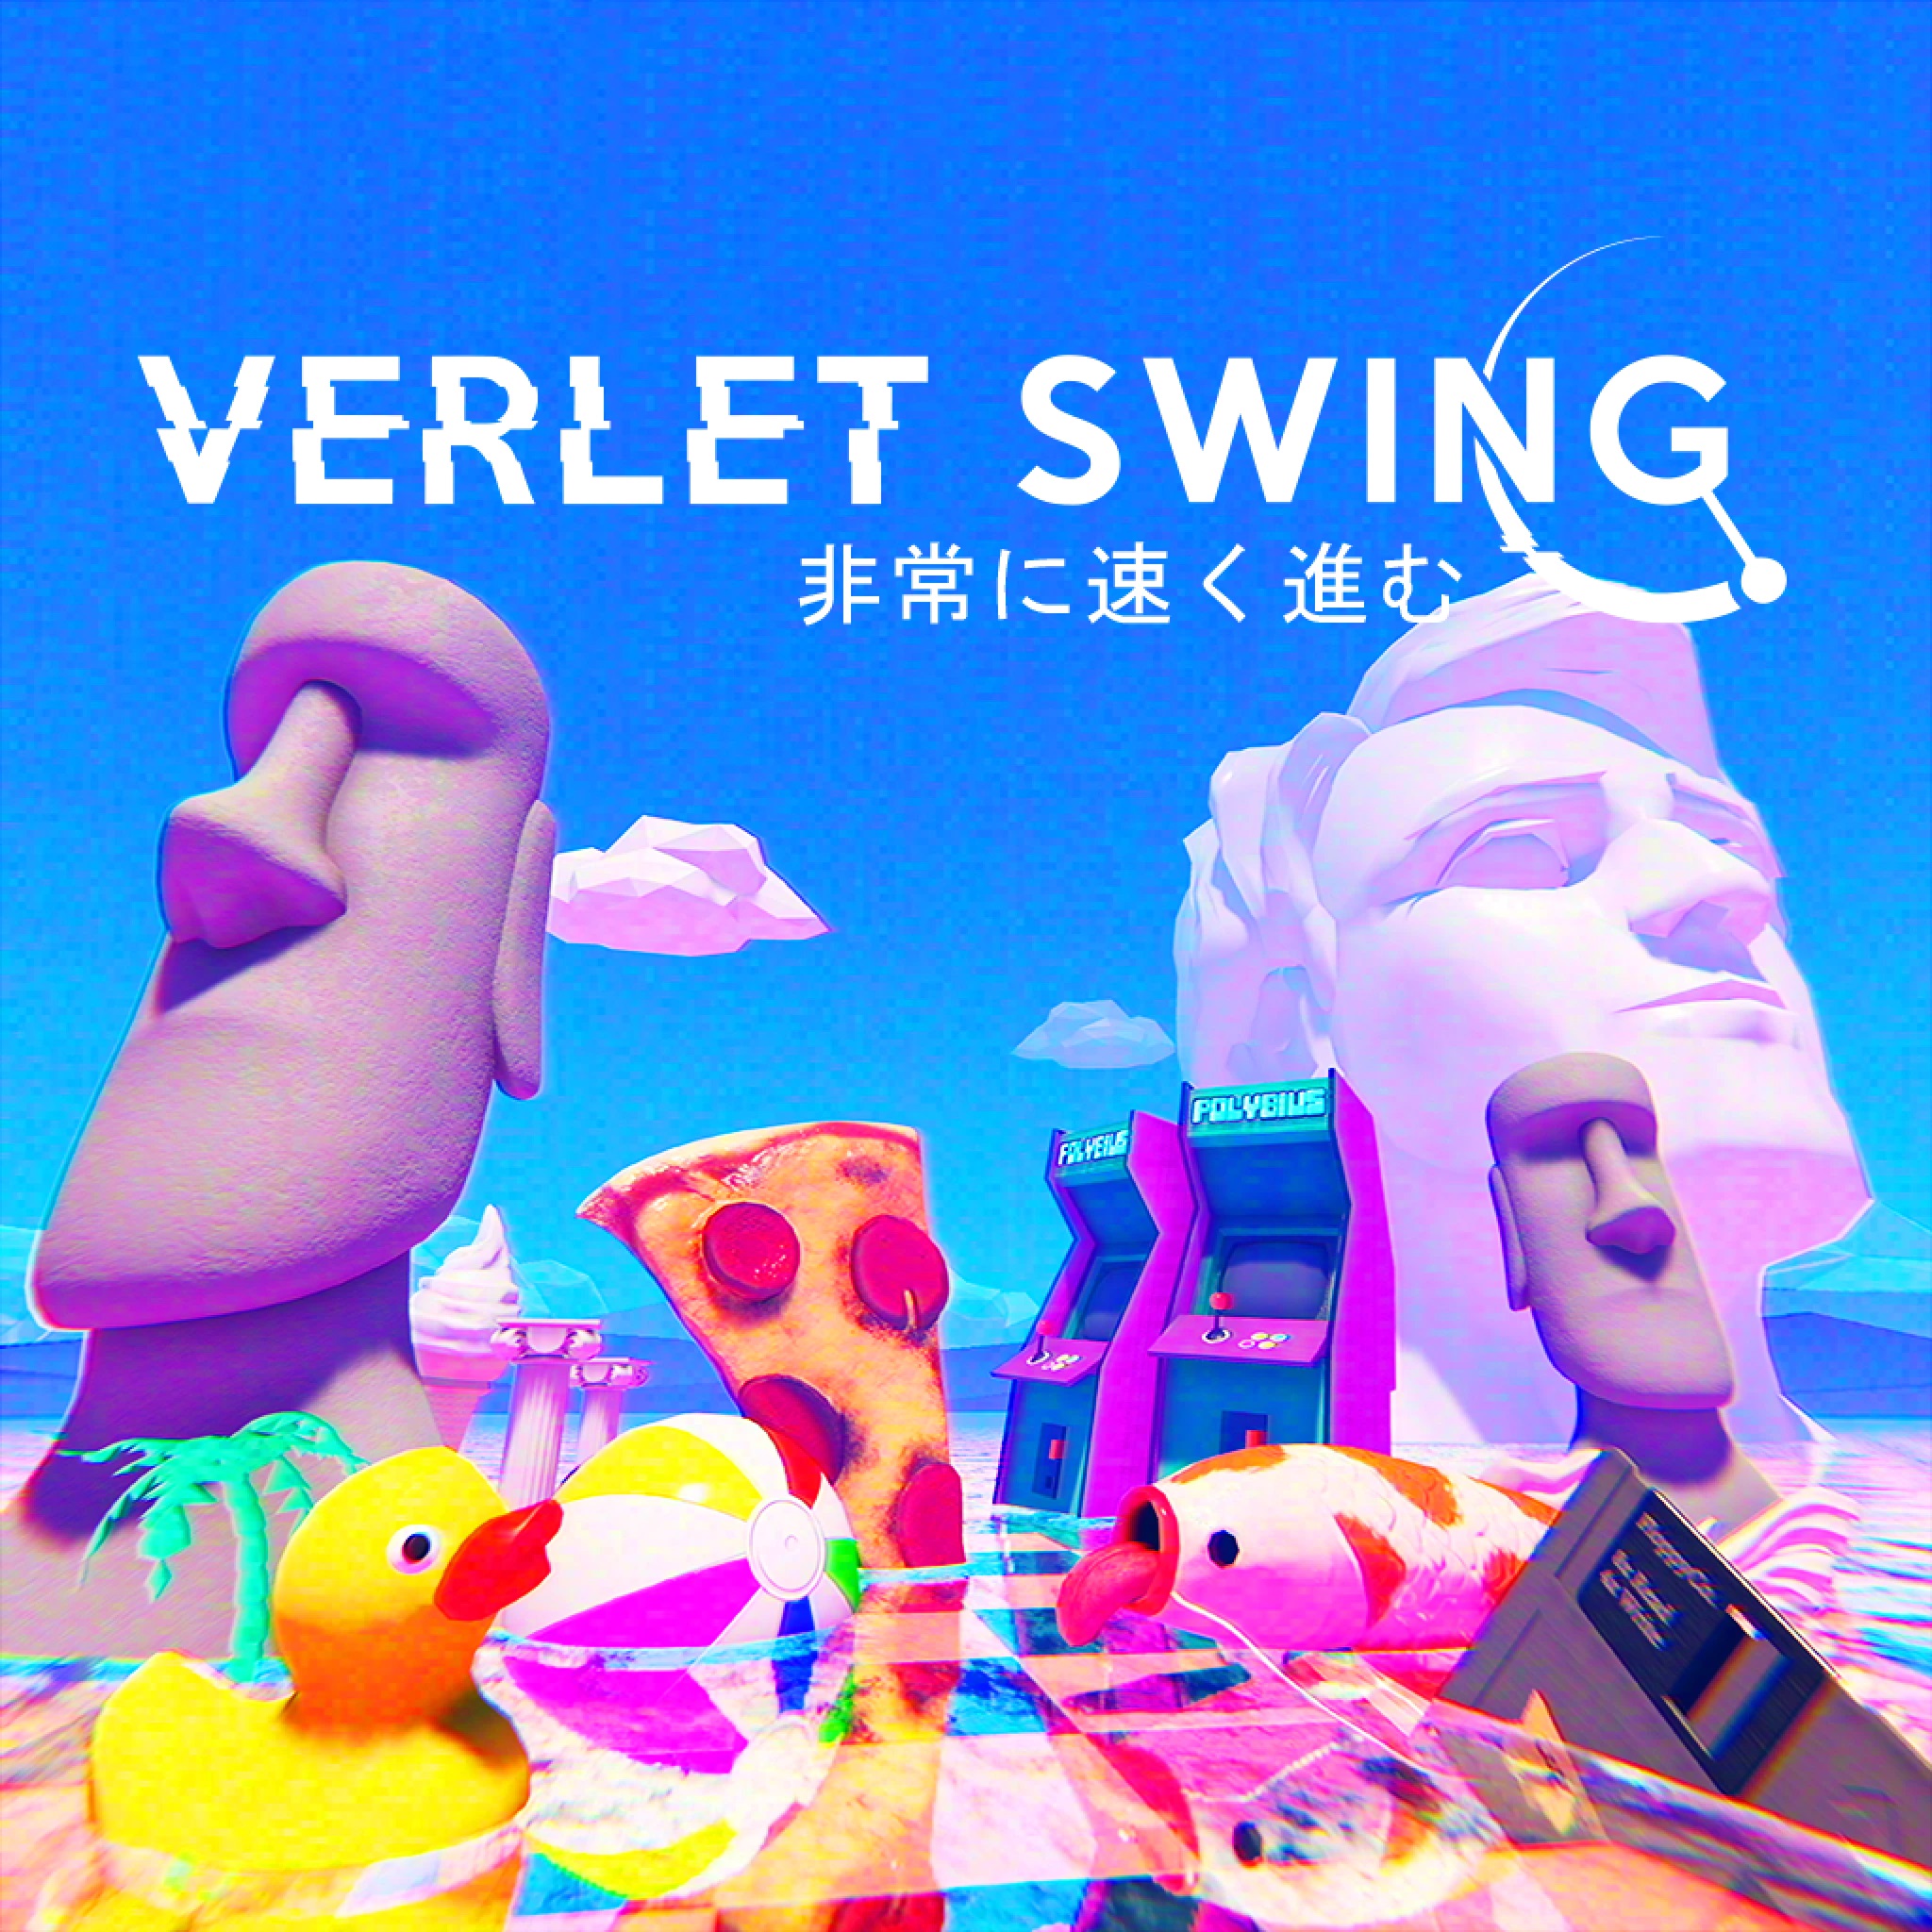 Verlet Swing (Steam key / Region Free)